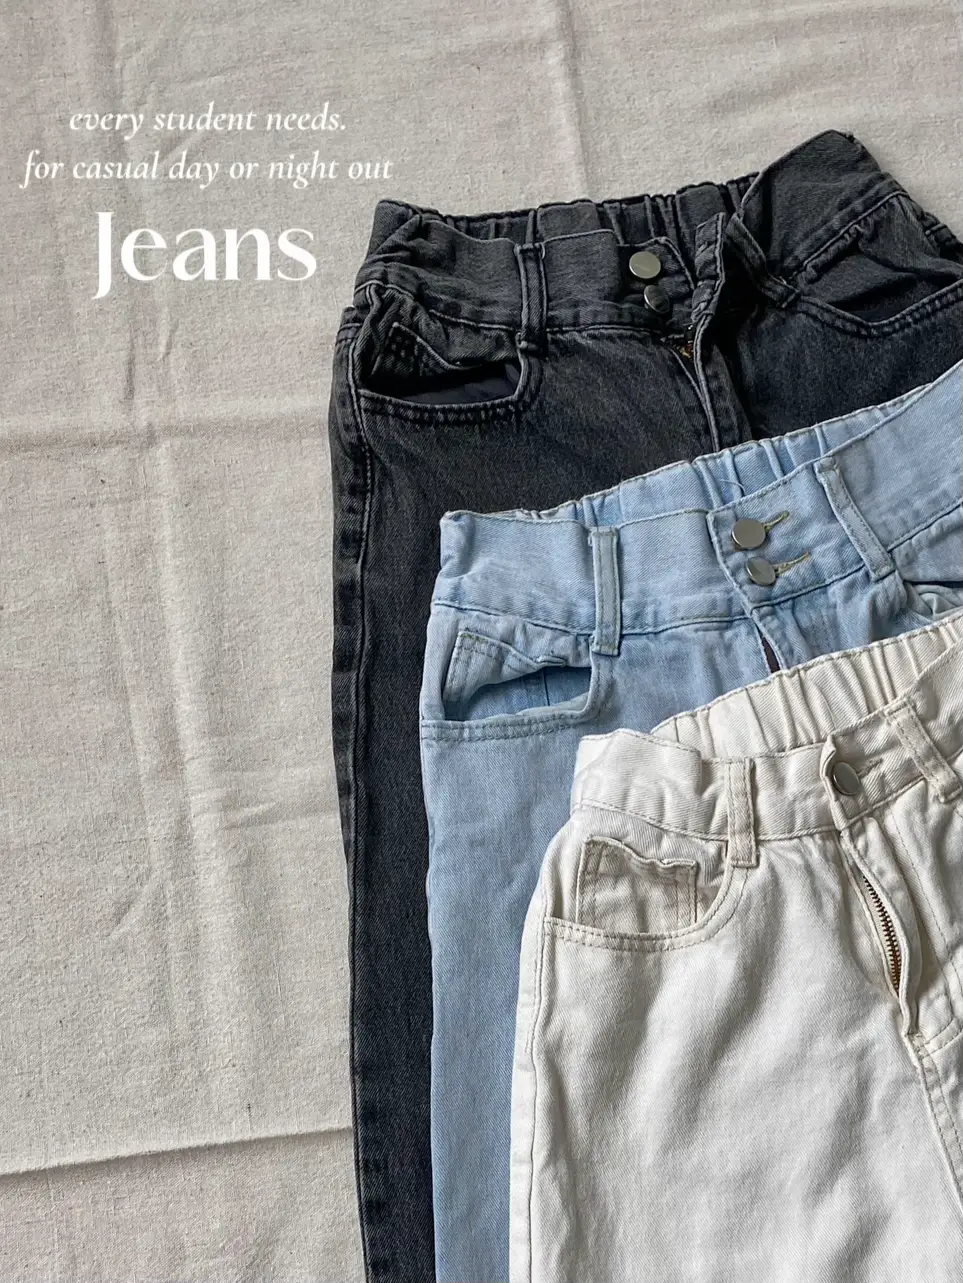 Korean Jeans Women Fashion Trend Loose Wide Leg Pants New Style Seluar  Wanita 牛仔褲女長褲